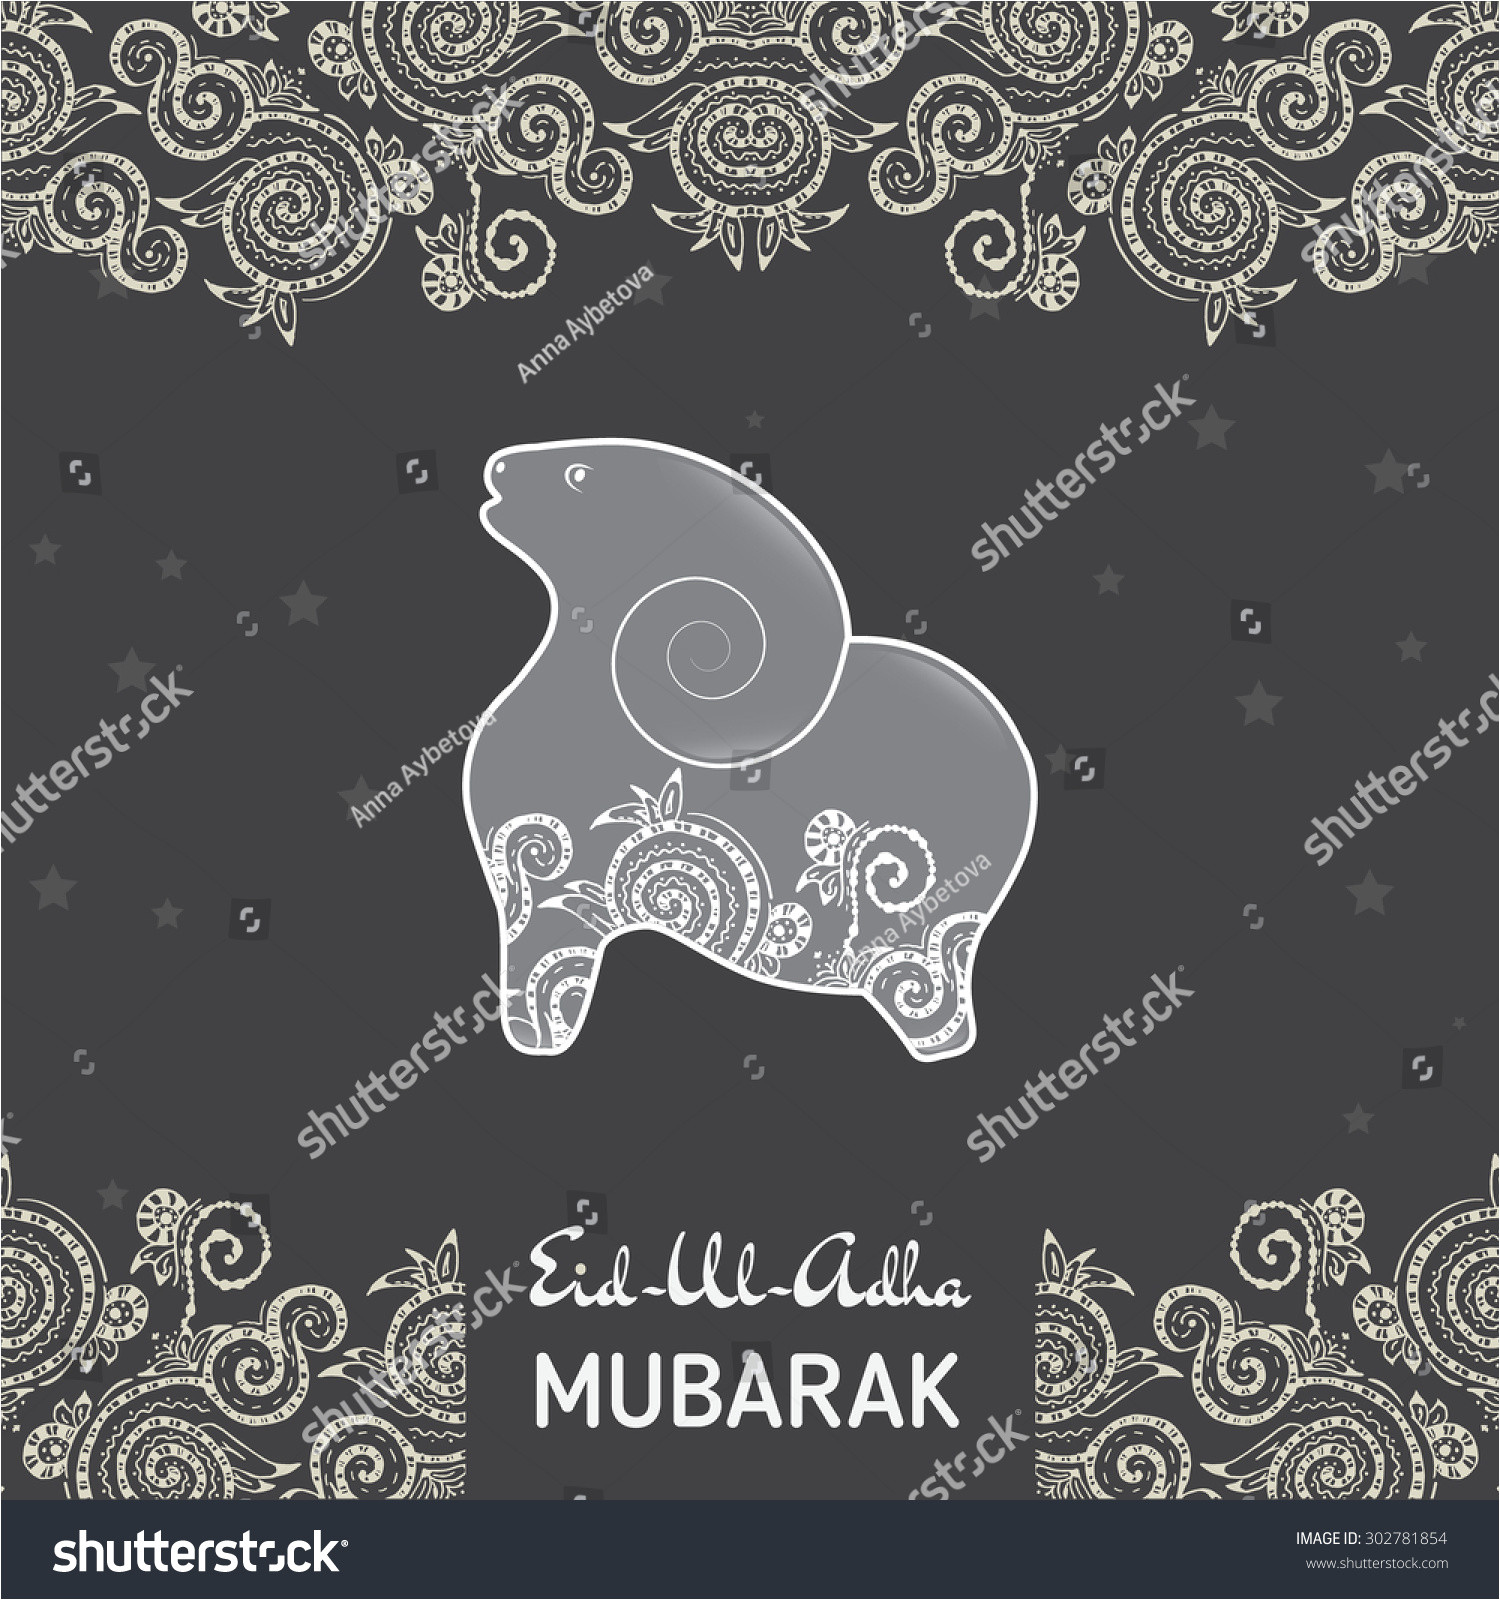 stock vector greeting card template for muslim community festival of sacrifice eid ul adha with flat sheep 302781854 jpg